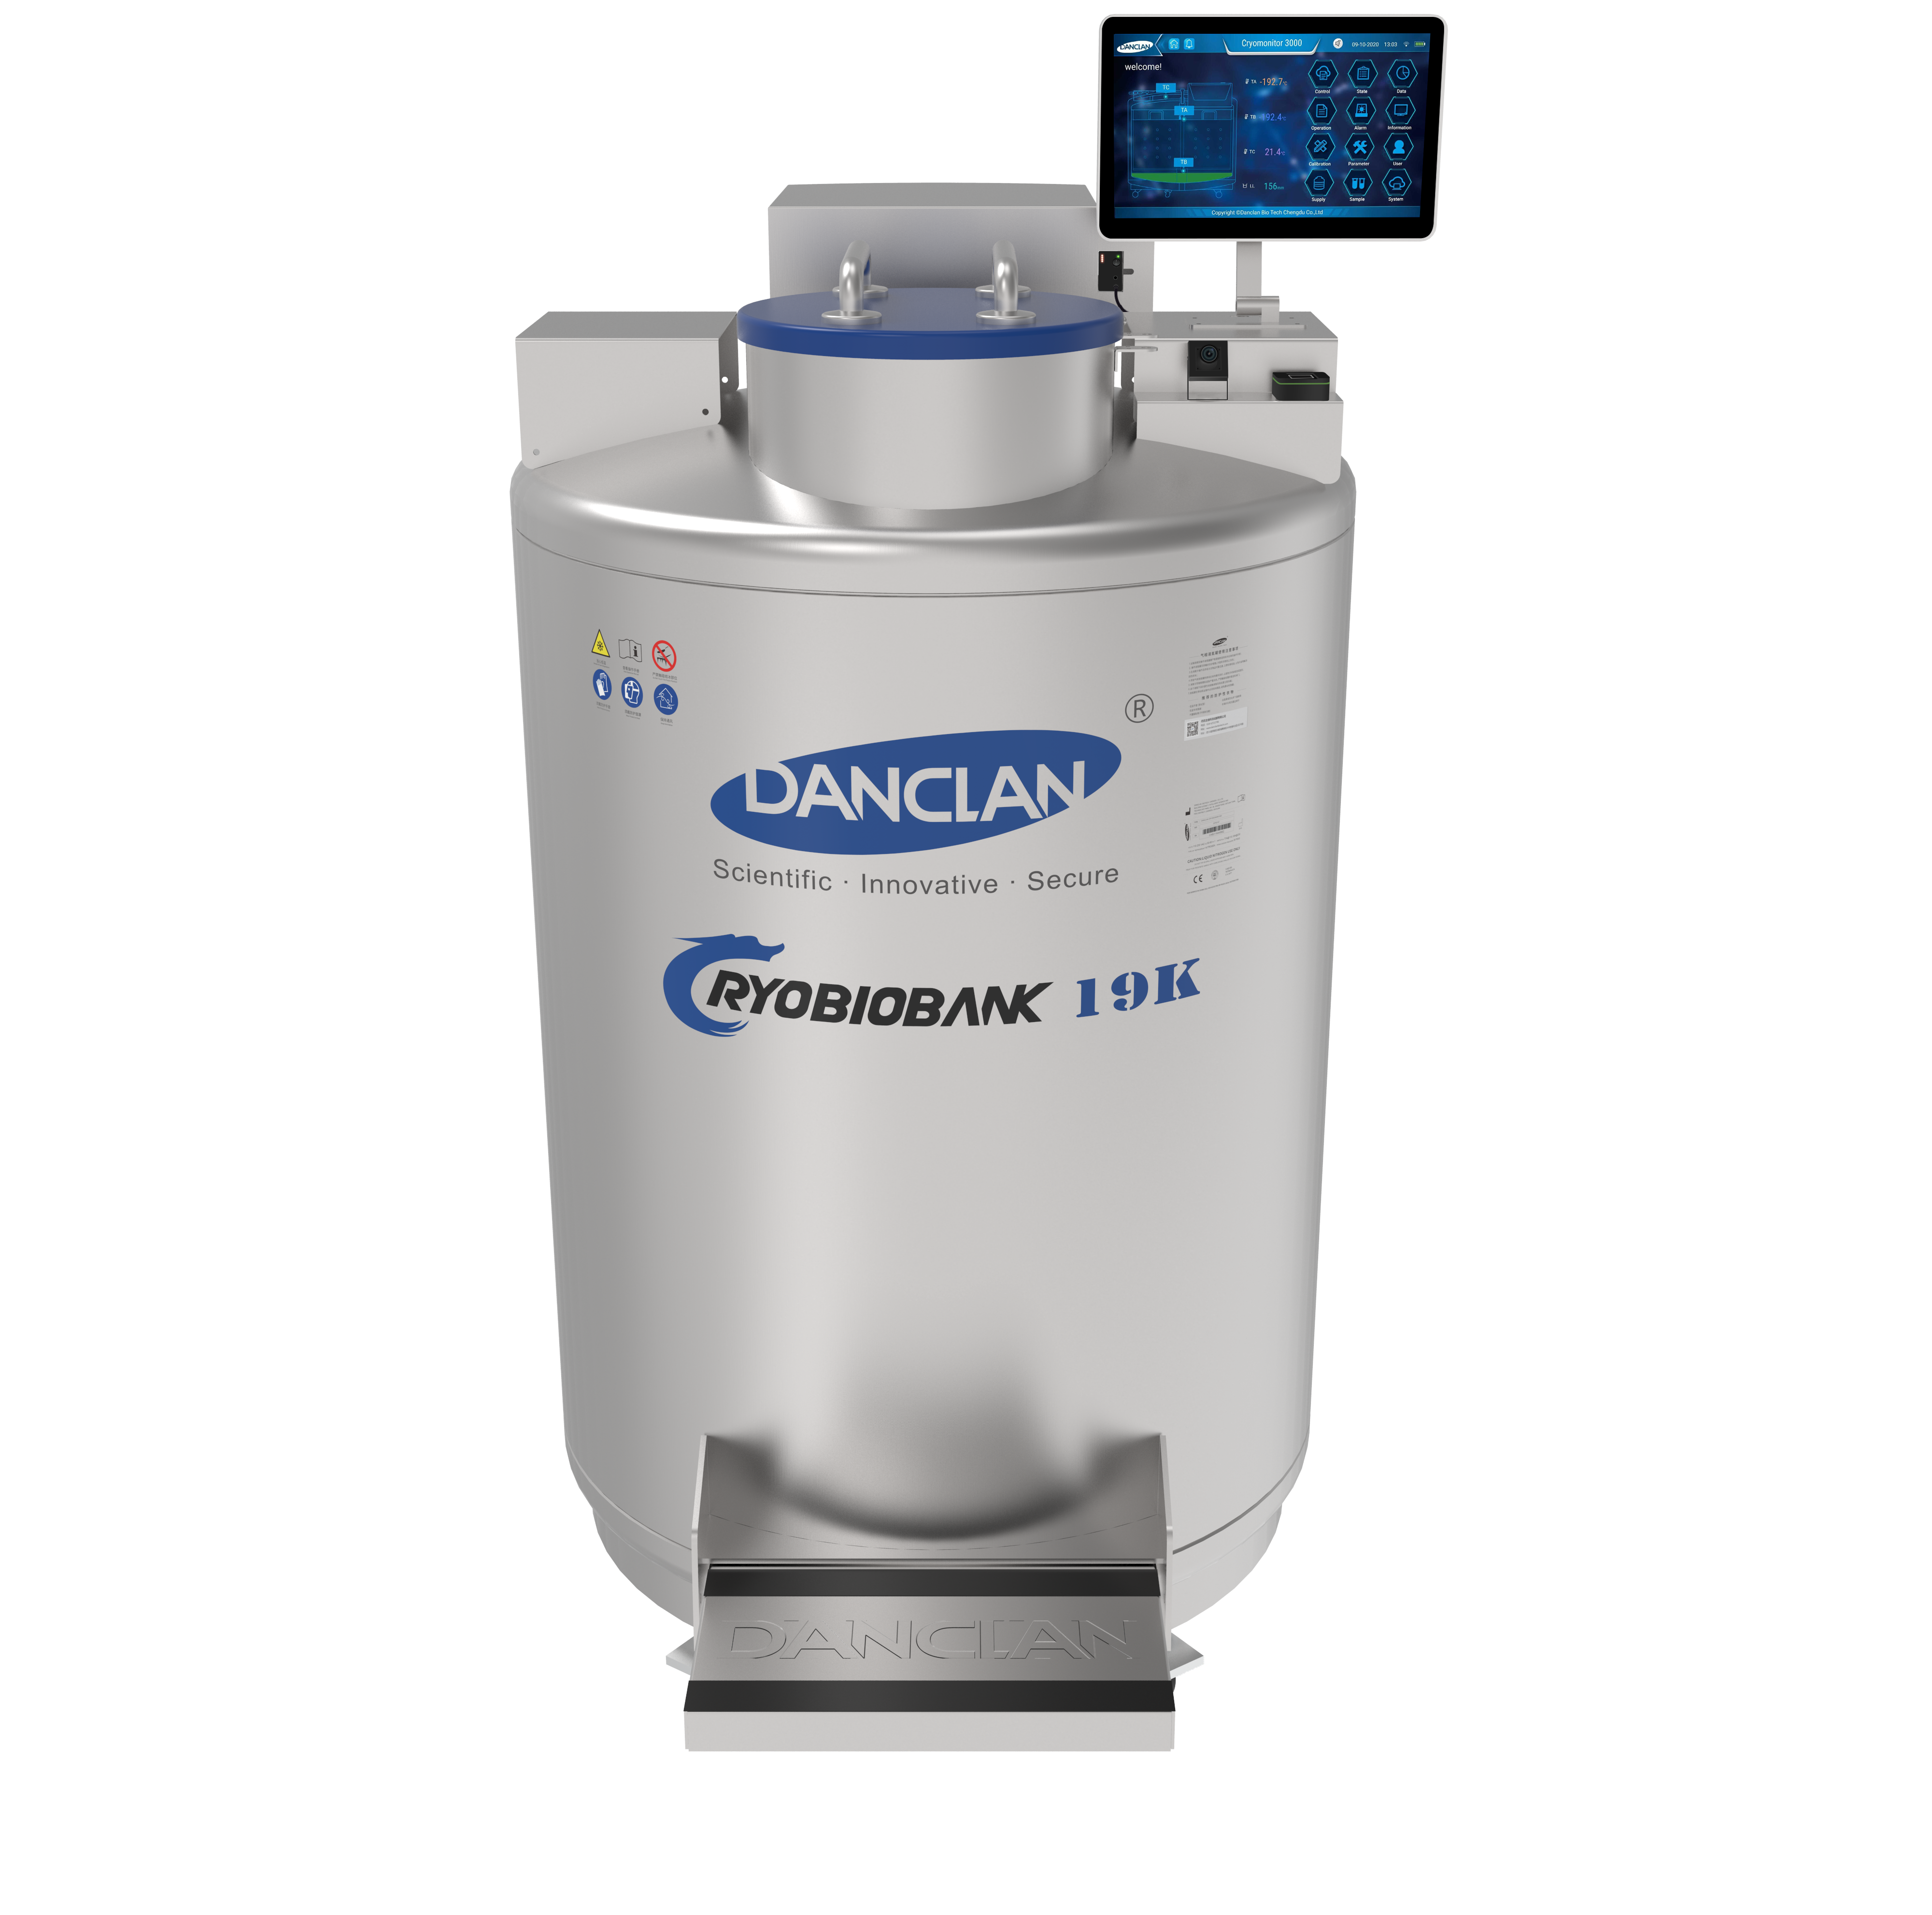 Large liquid nitorgen tank for biobank- Cryobiobank 19K